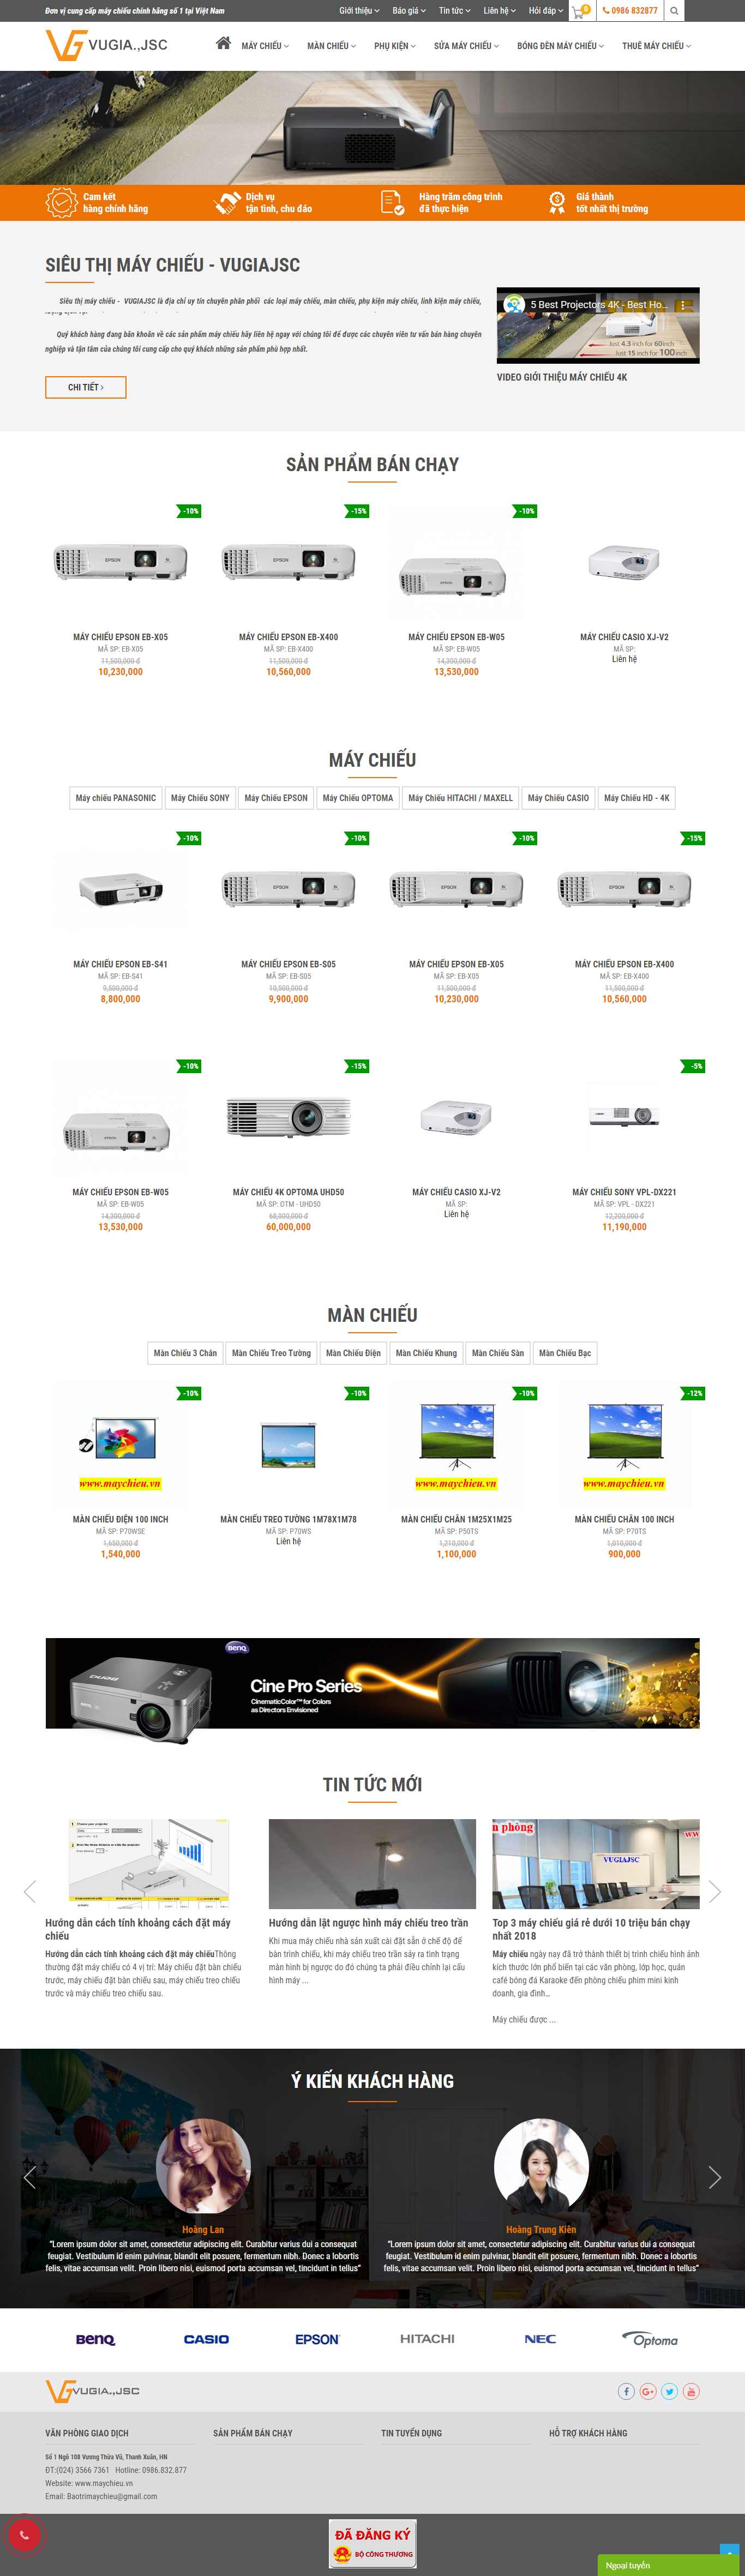 Thiết kế Website máy chiếu - maychieu.vn